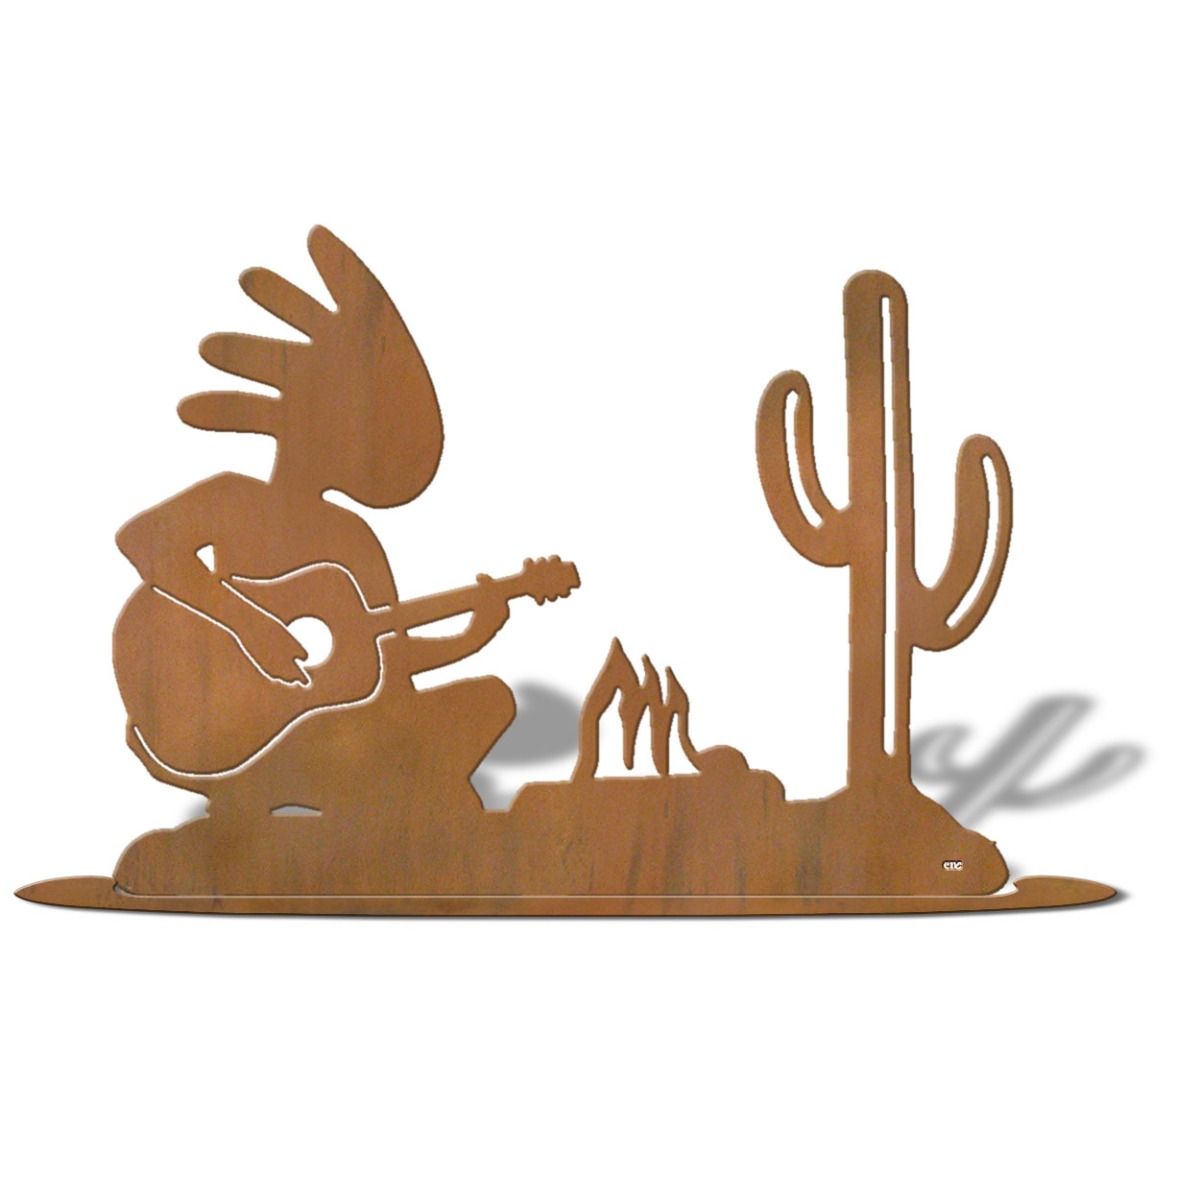 623021r - Tabletop Art - 20in x 15in - Cactus Camper - Rust Patina